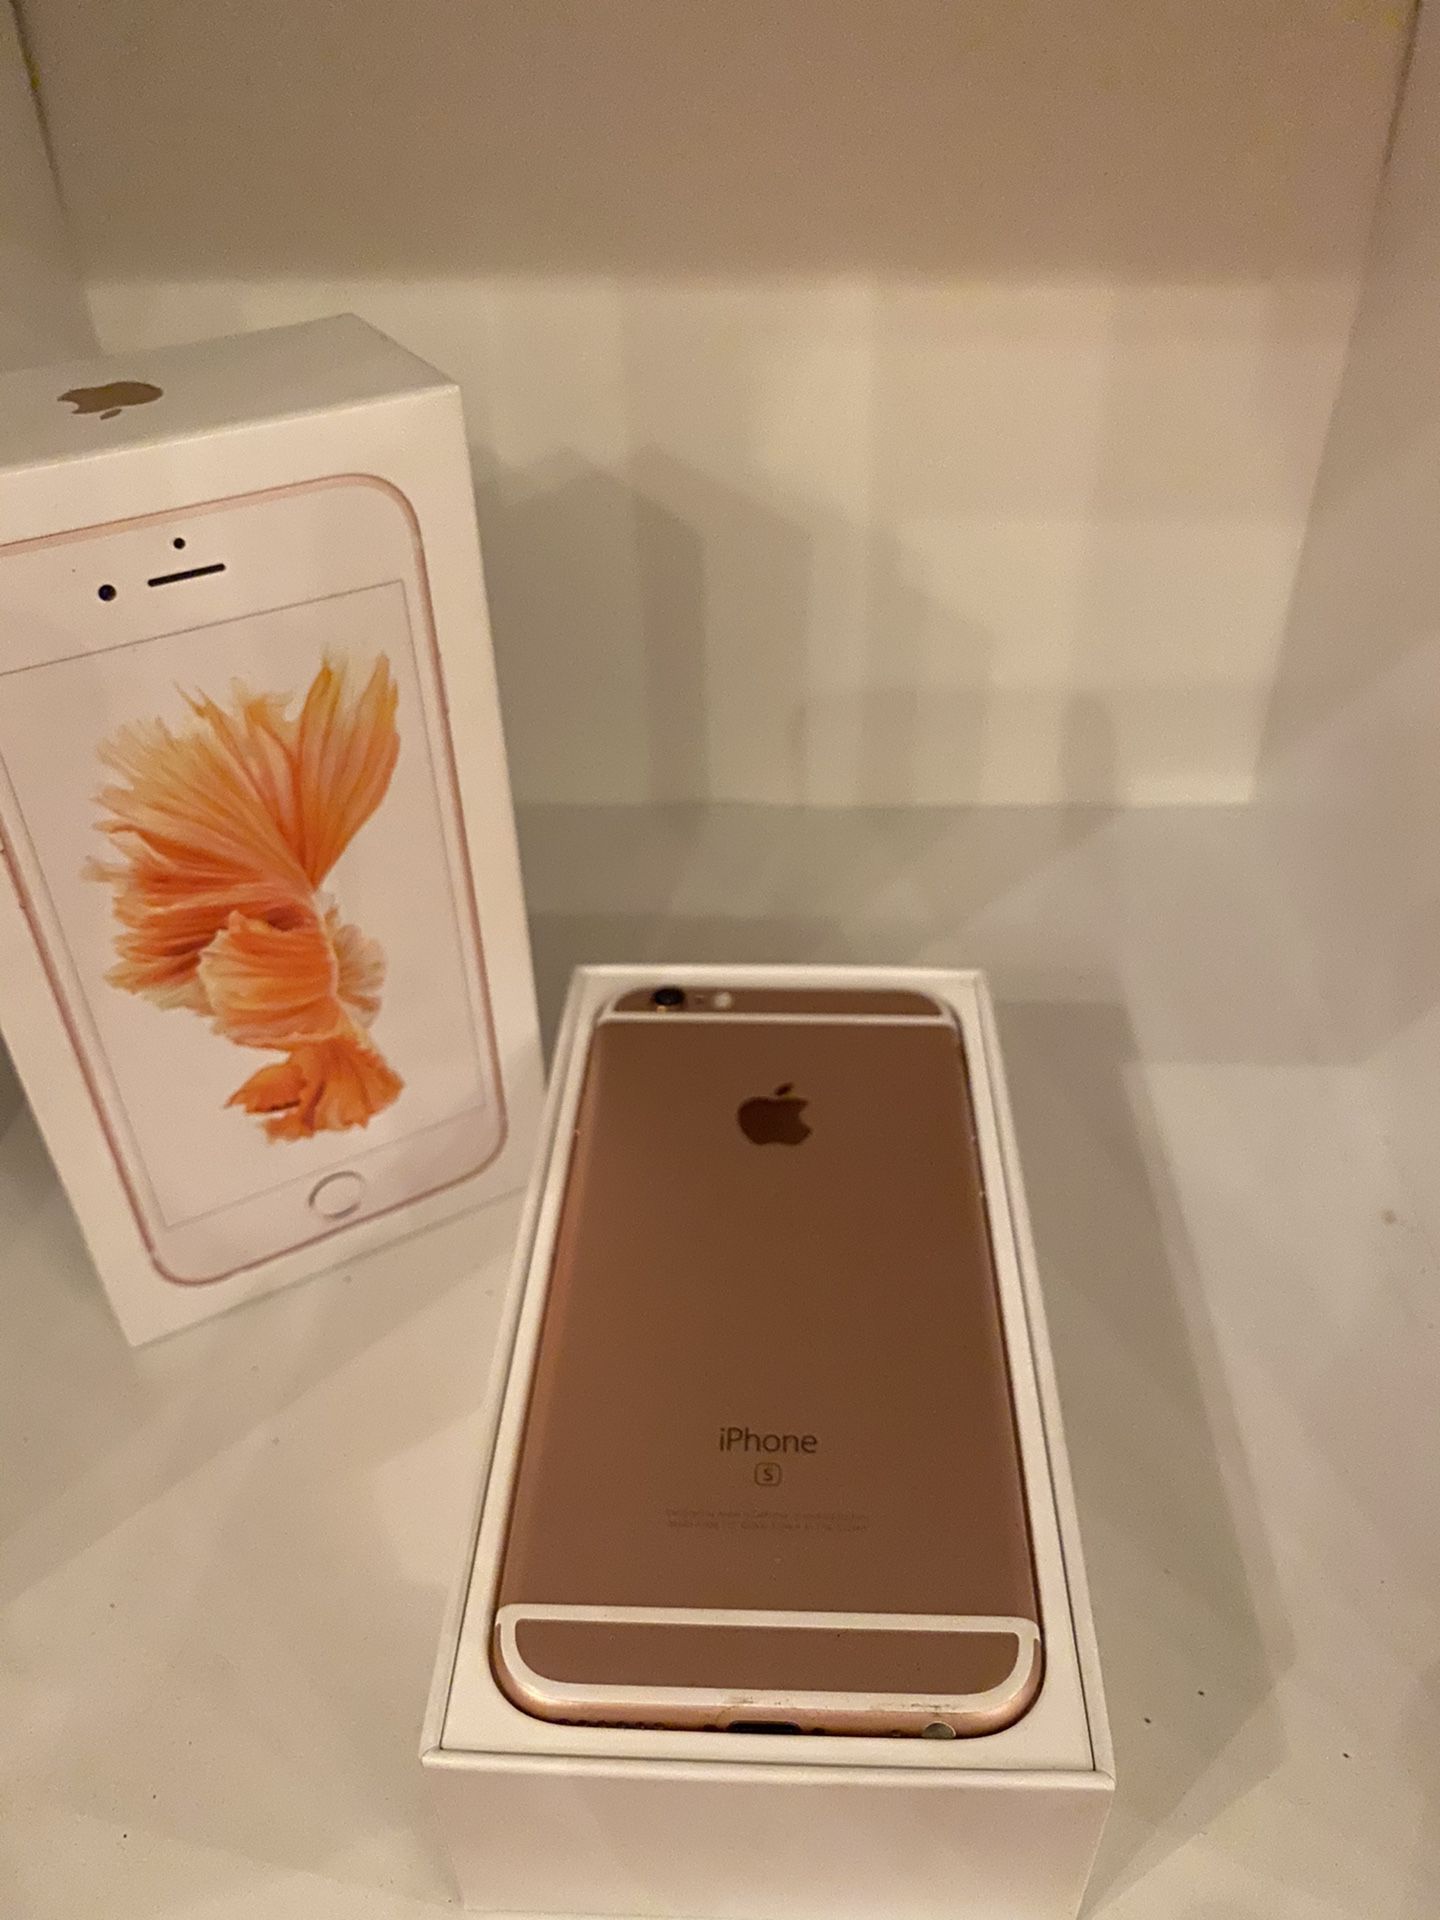 Apple iPhone 6s (A1688) - 16GB - Rose Gold - Unlocked